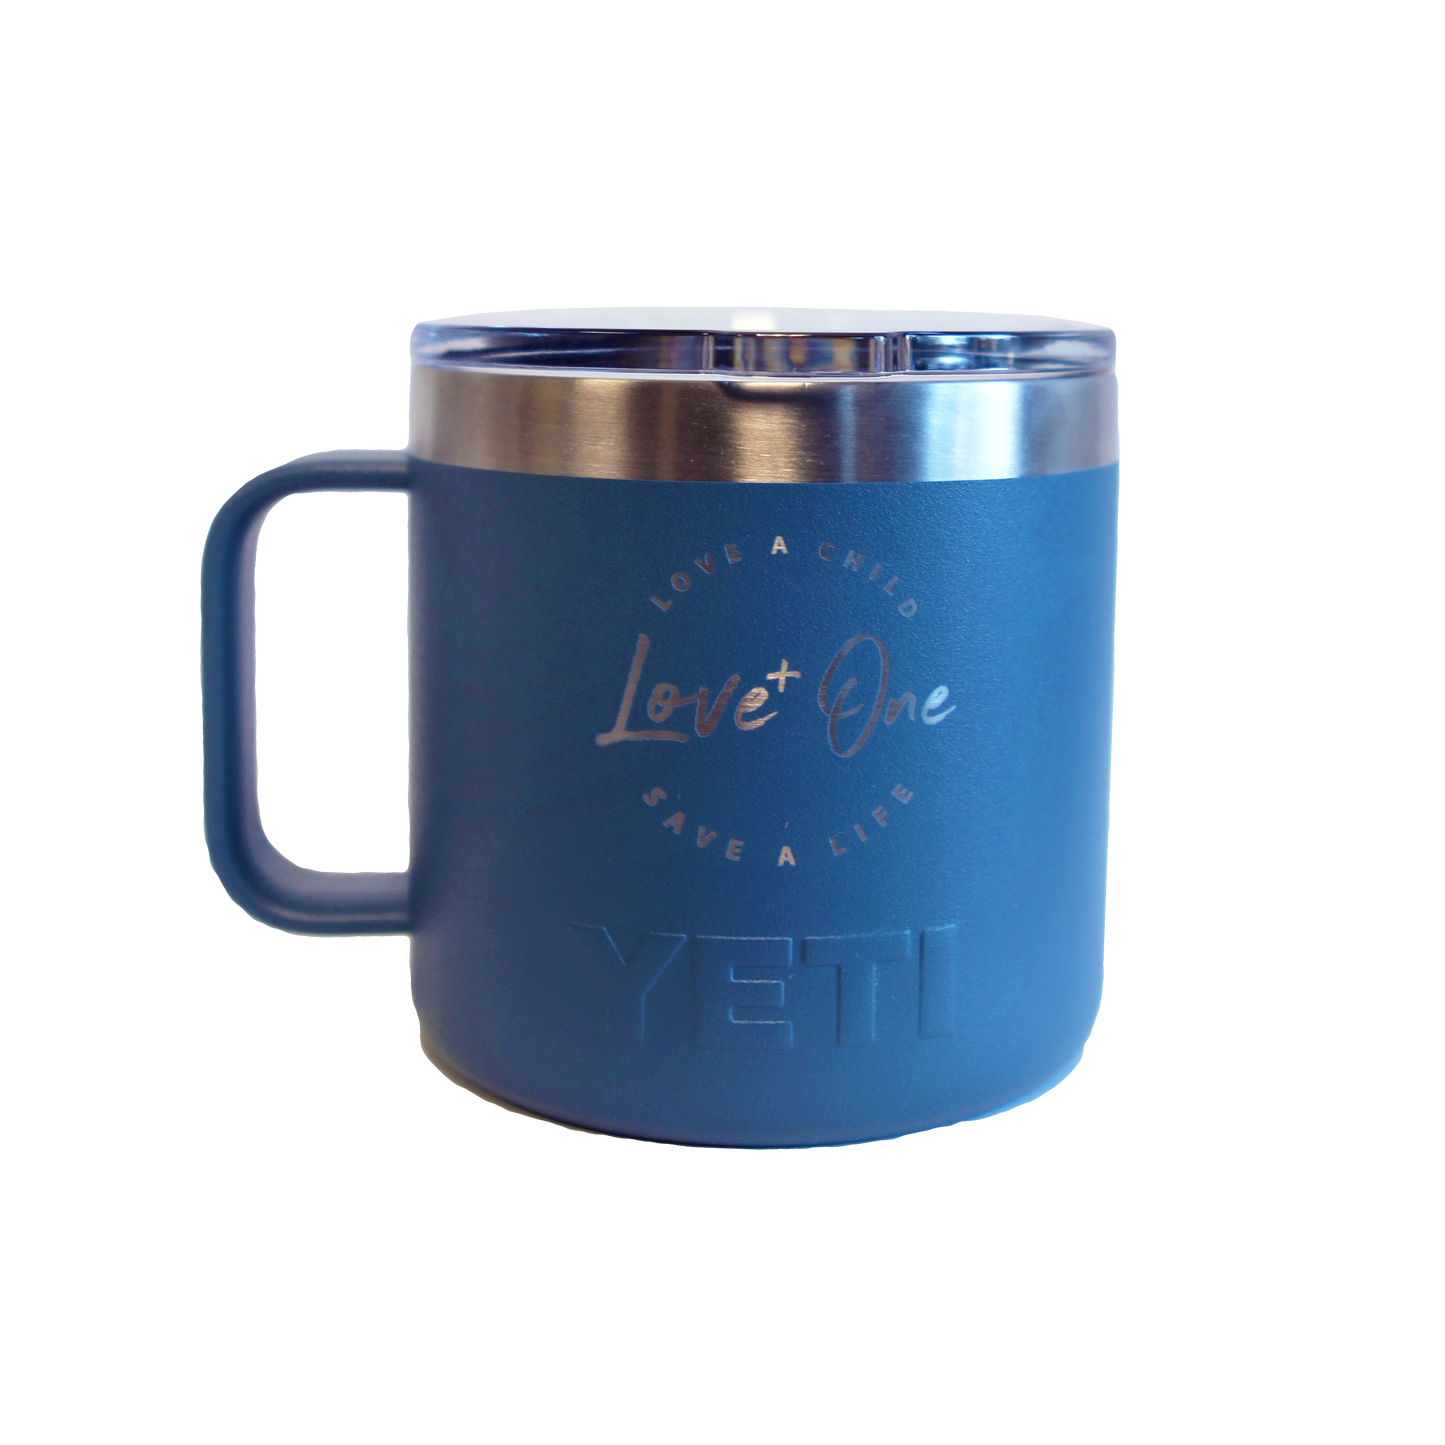 YETI - Rambler 14oz Mug - Nordic Blue – ULAH